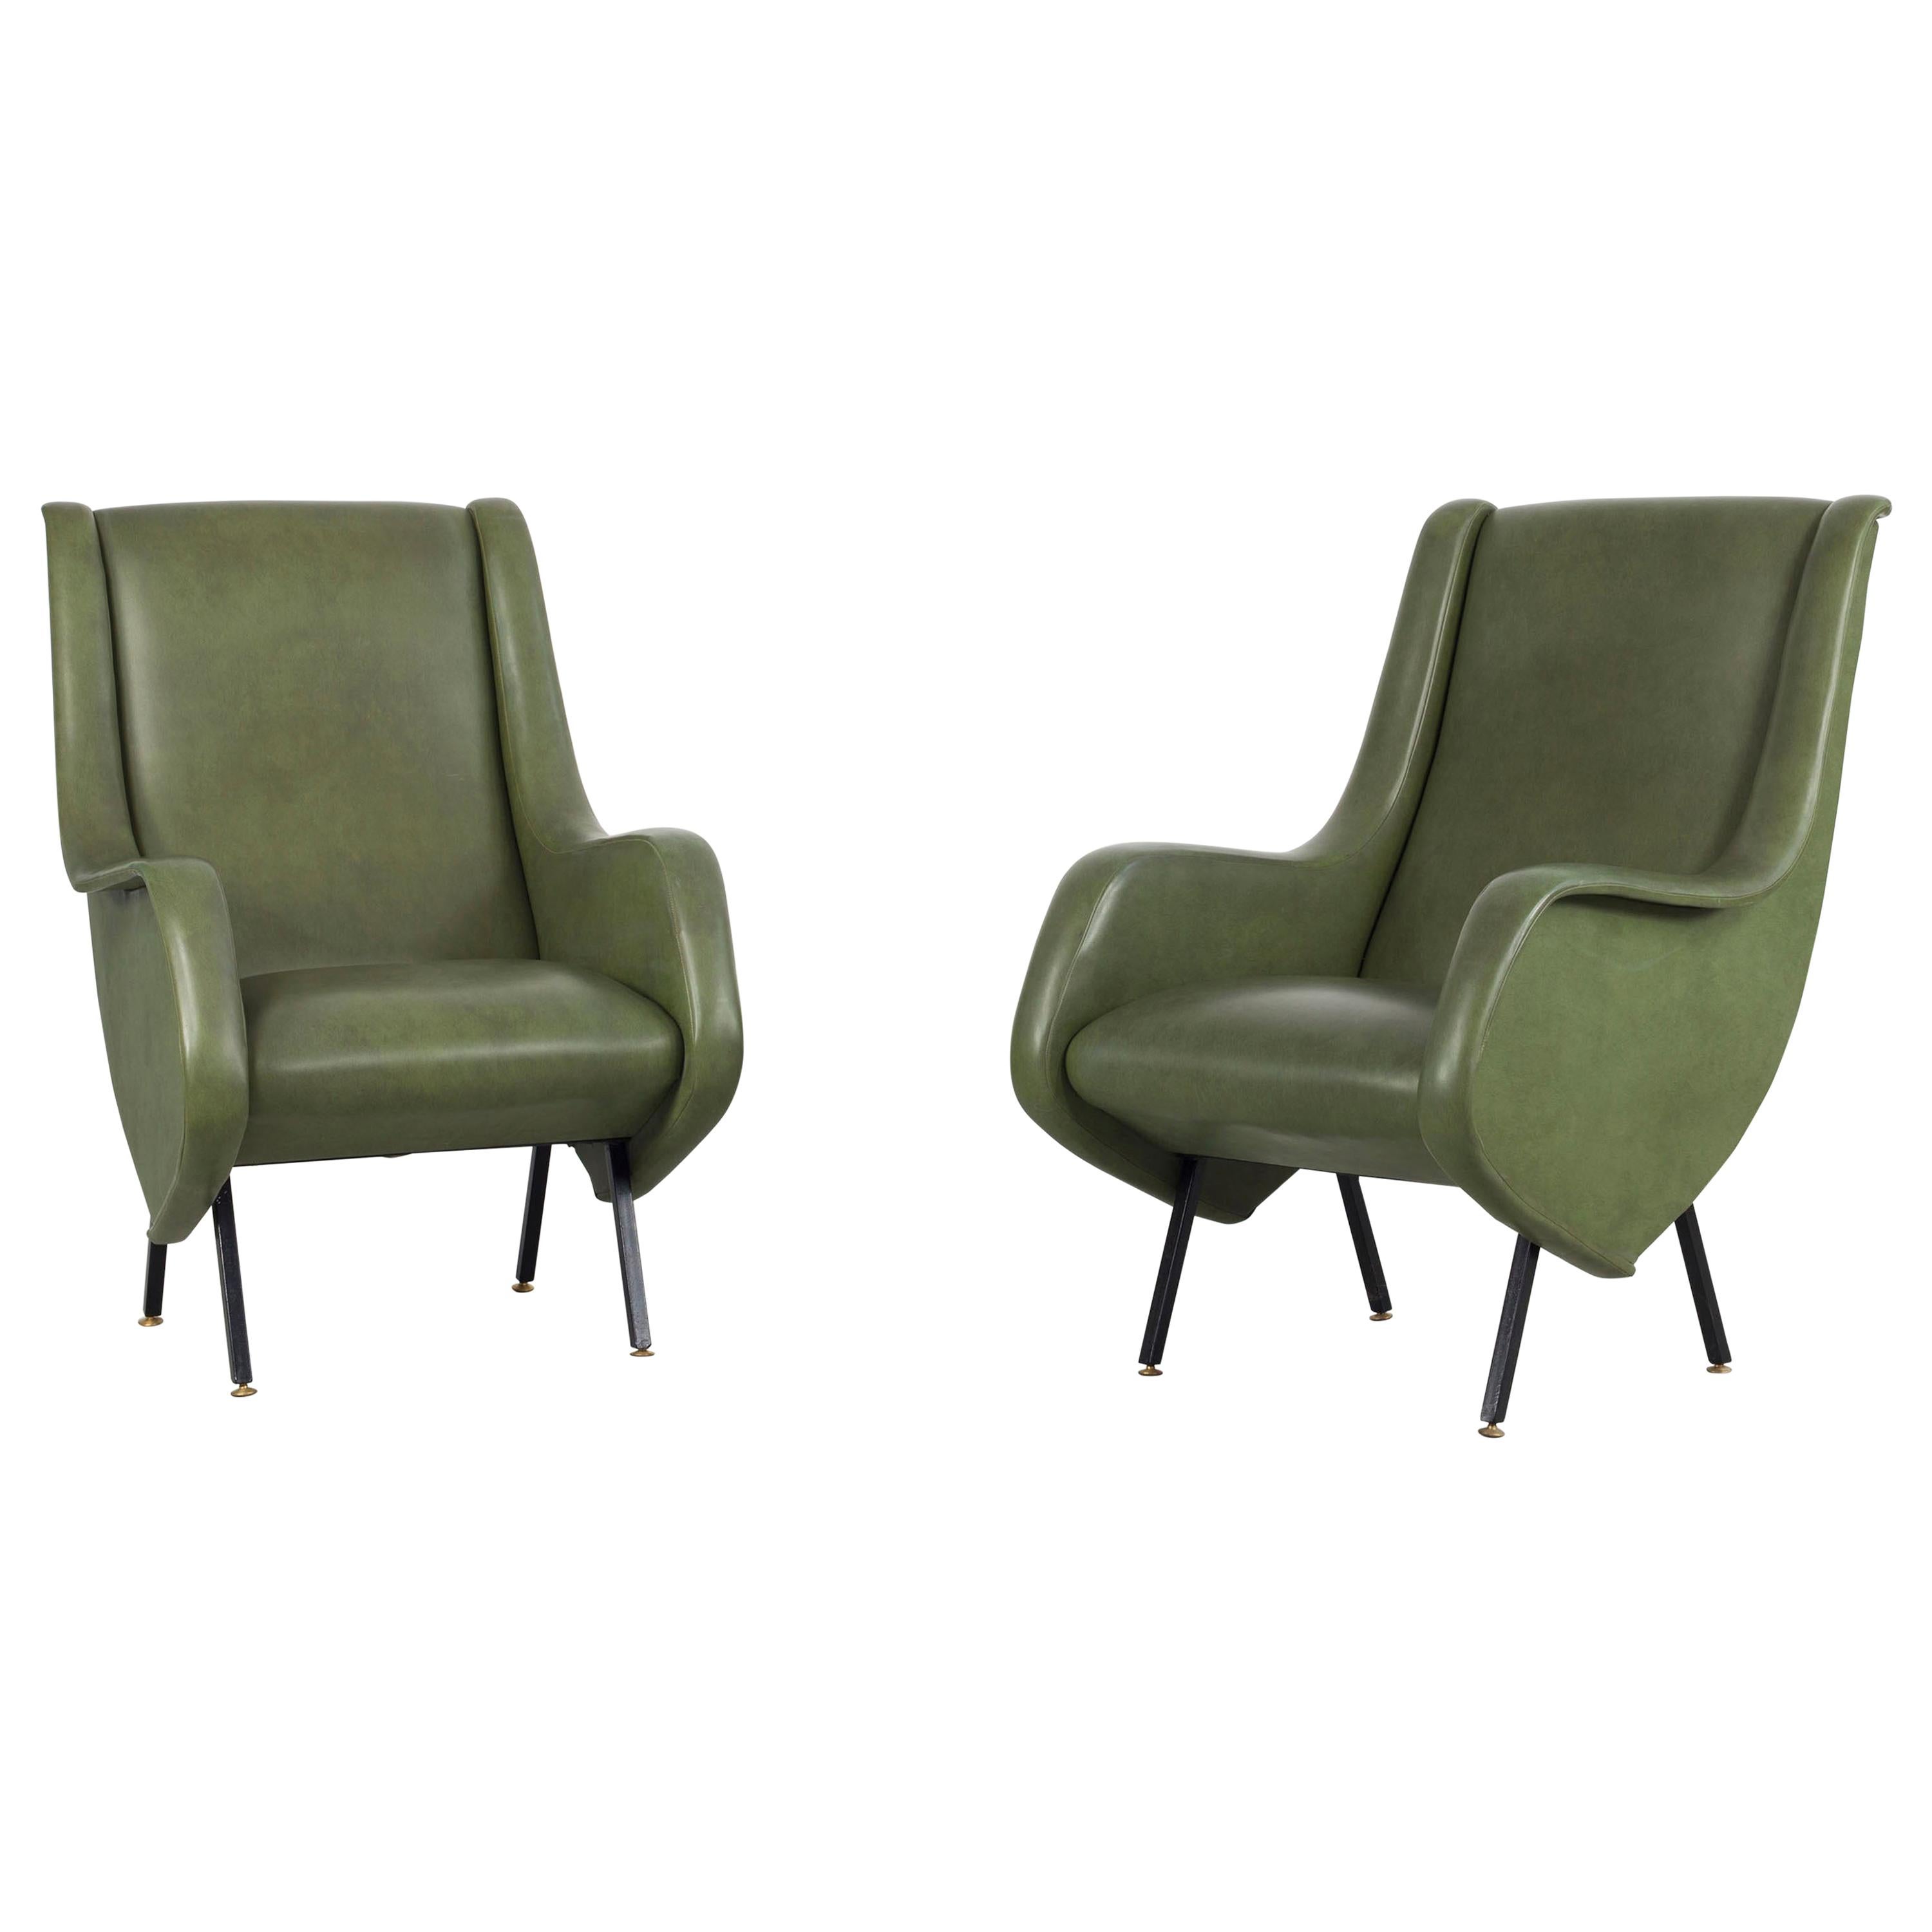 Pair of Italian Midcentury Armchairs in Original Green Fauxleather, 1950s